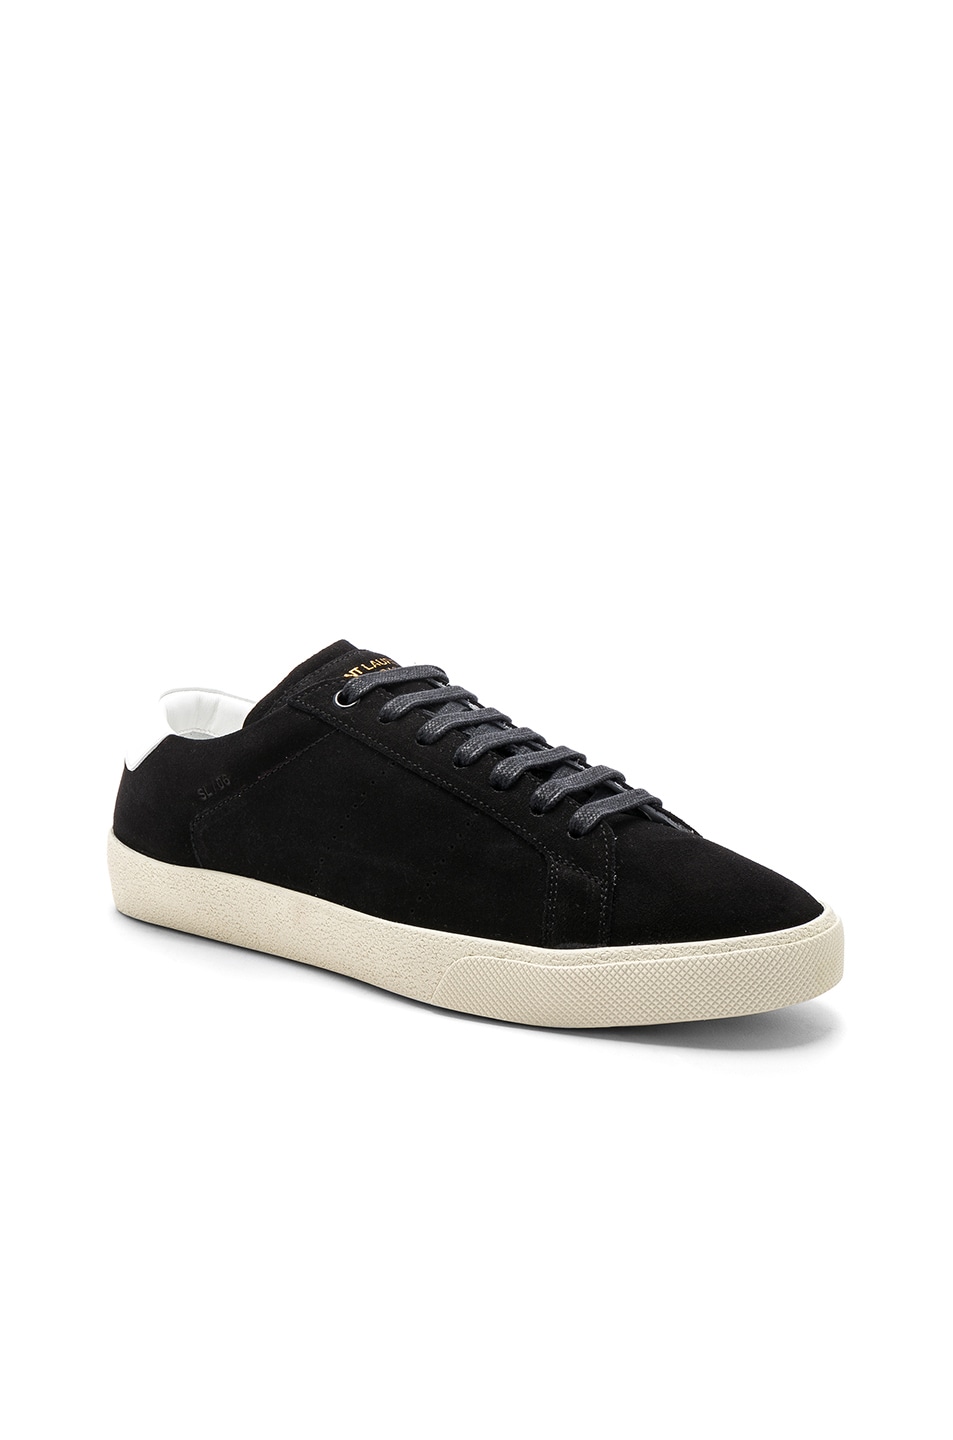 Image 1 of Saint Laurent Suede Low-Top Sneakers in Black & White